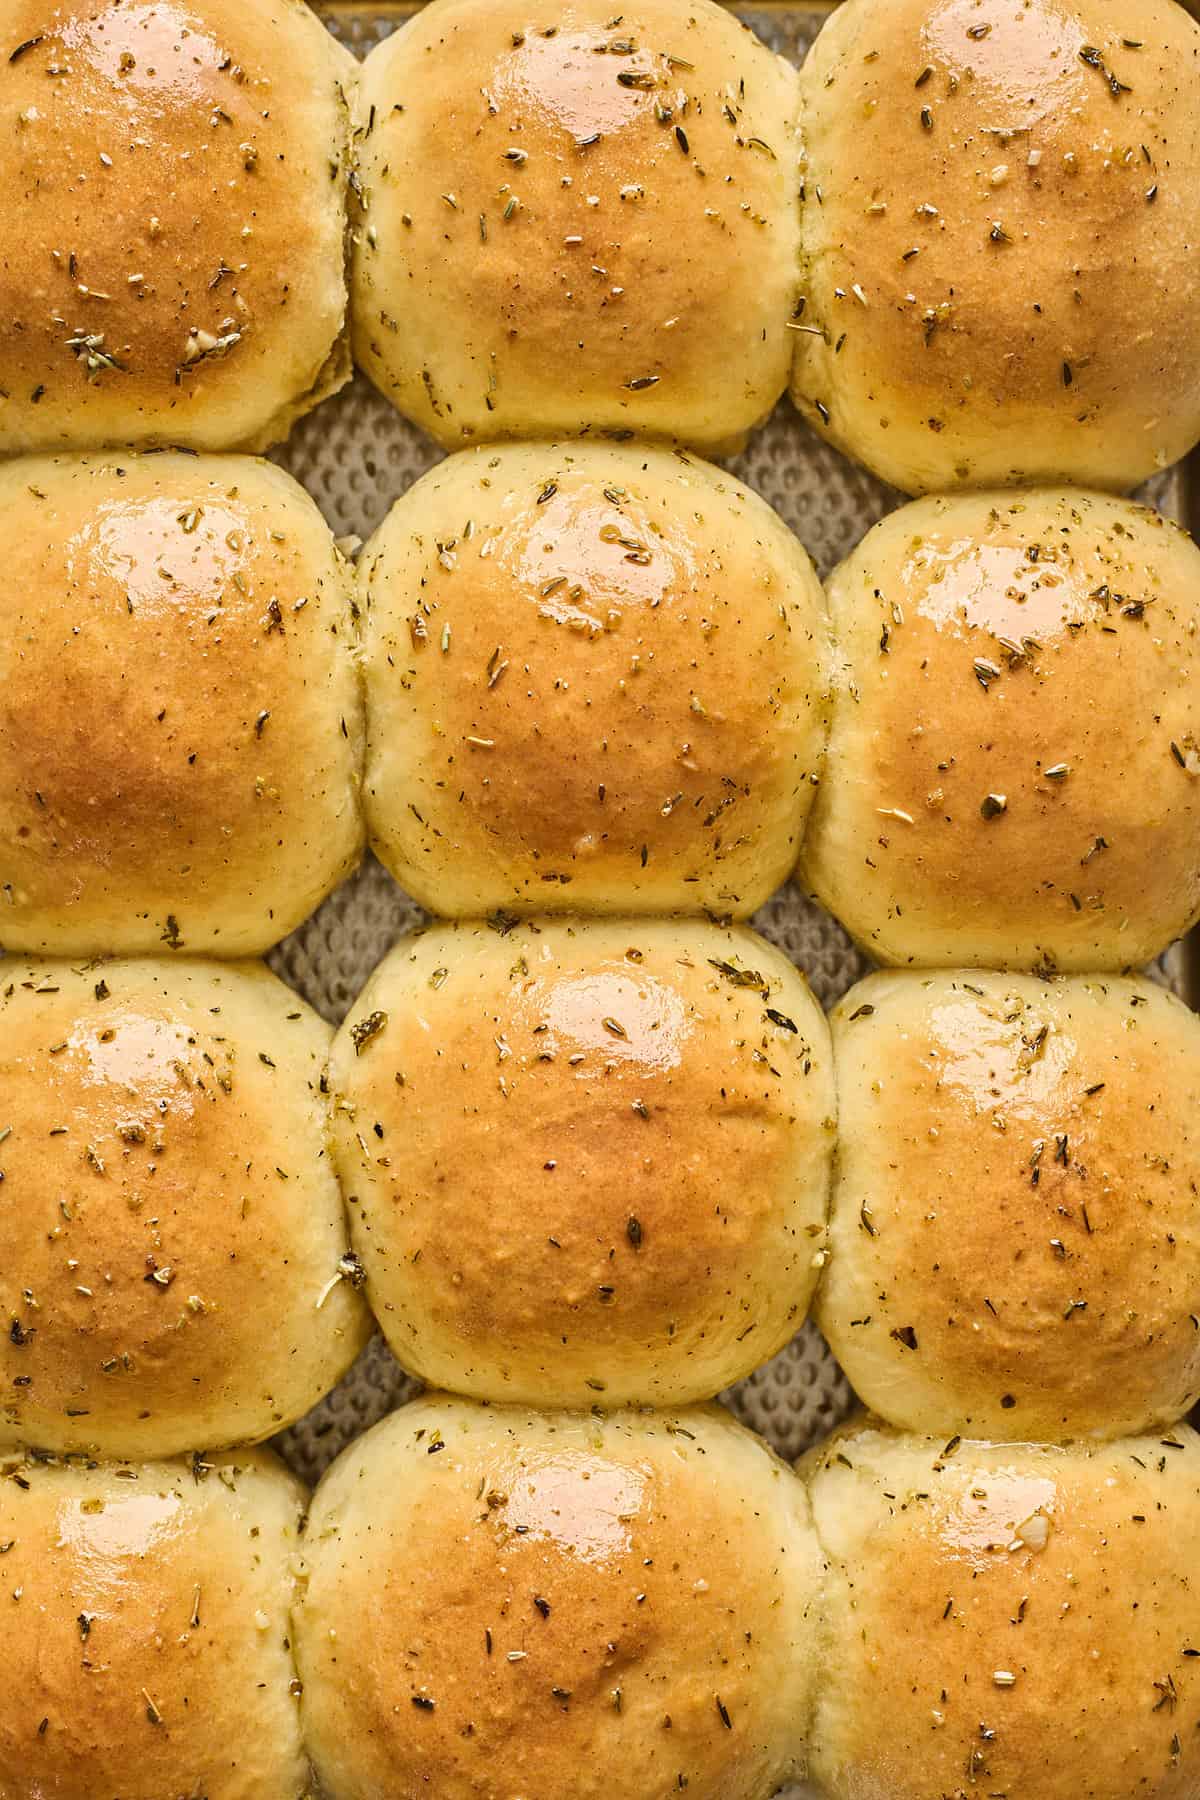 Twelve potato rolls on a baking sheet after being glazed